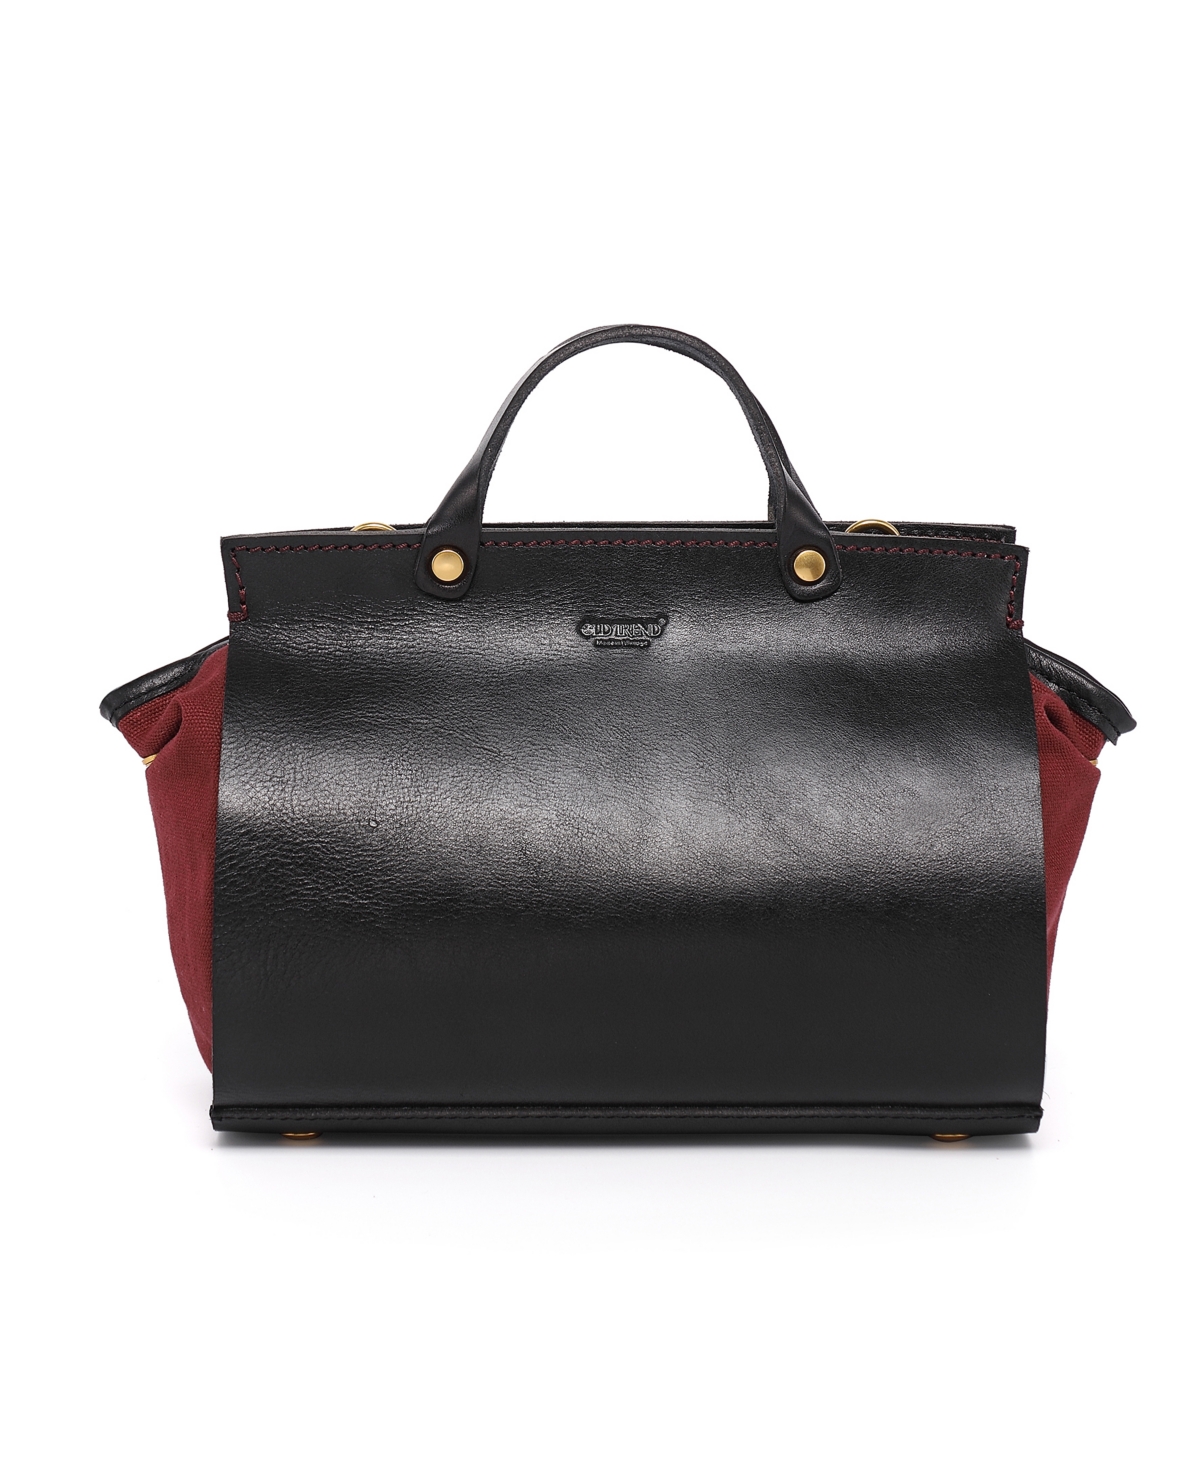 Women's Genuine Leather Out West Satchel Bag - Black